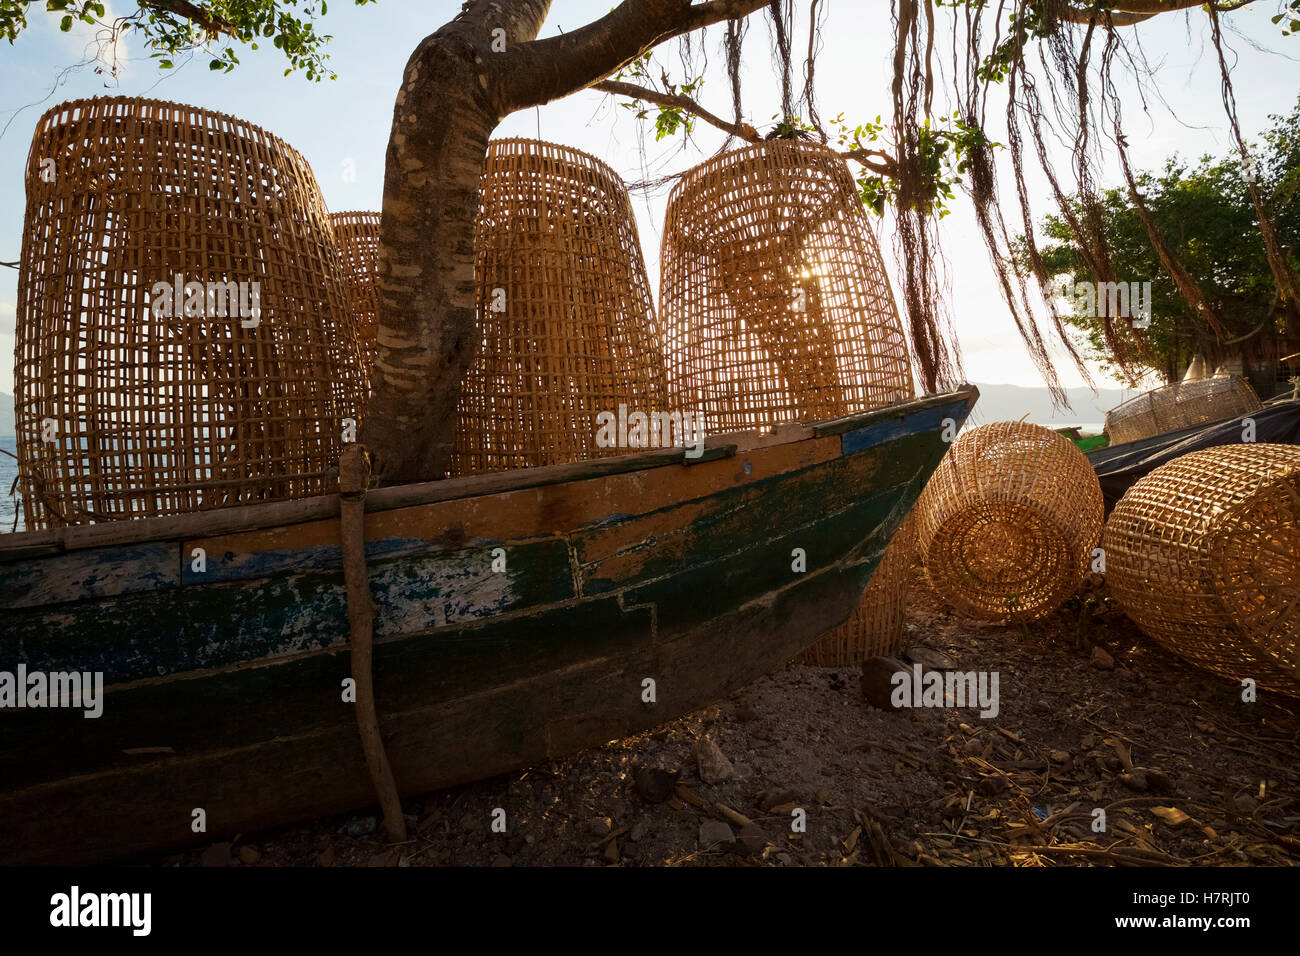 Fishing boat with traditional fishing nets, Ternat Island, Alor, Indonesia Stock Photo